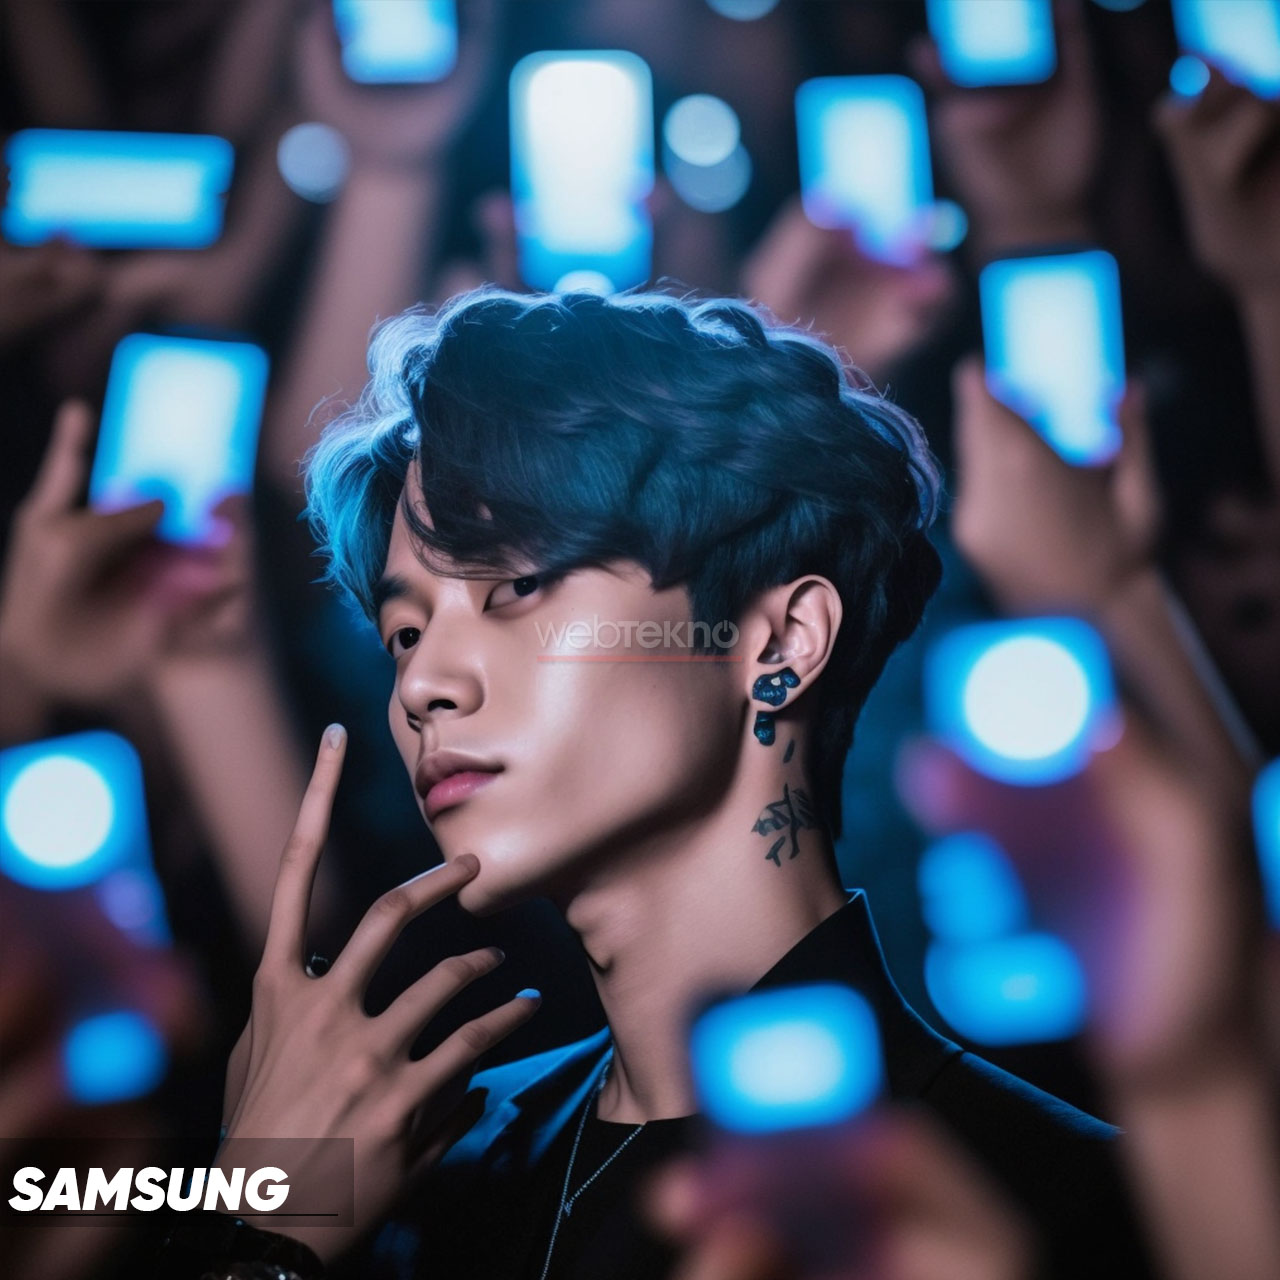 What if Samsung were human?